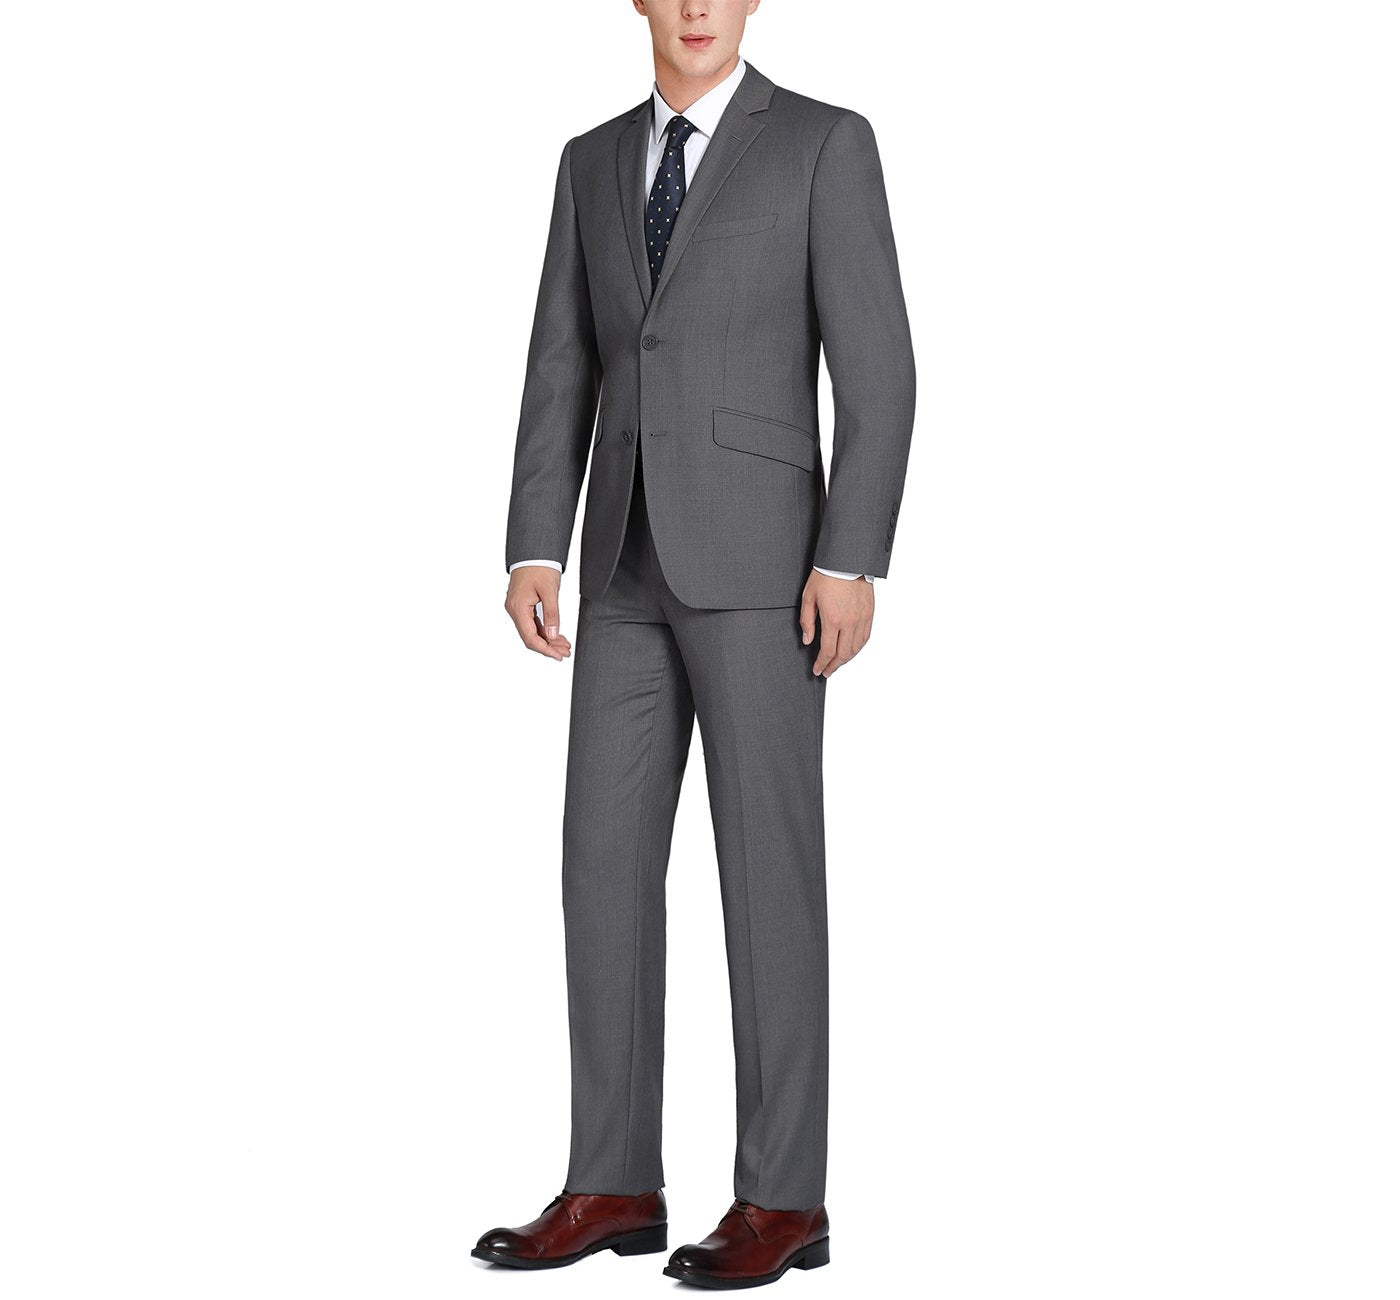 202-1 Men's Dark Grey 2-Piece Single Breasted Notch Lapel Suit